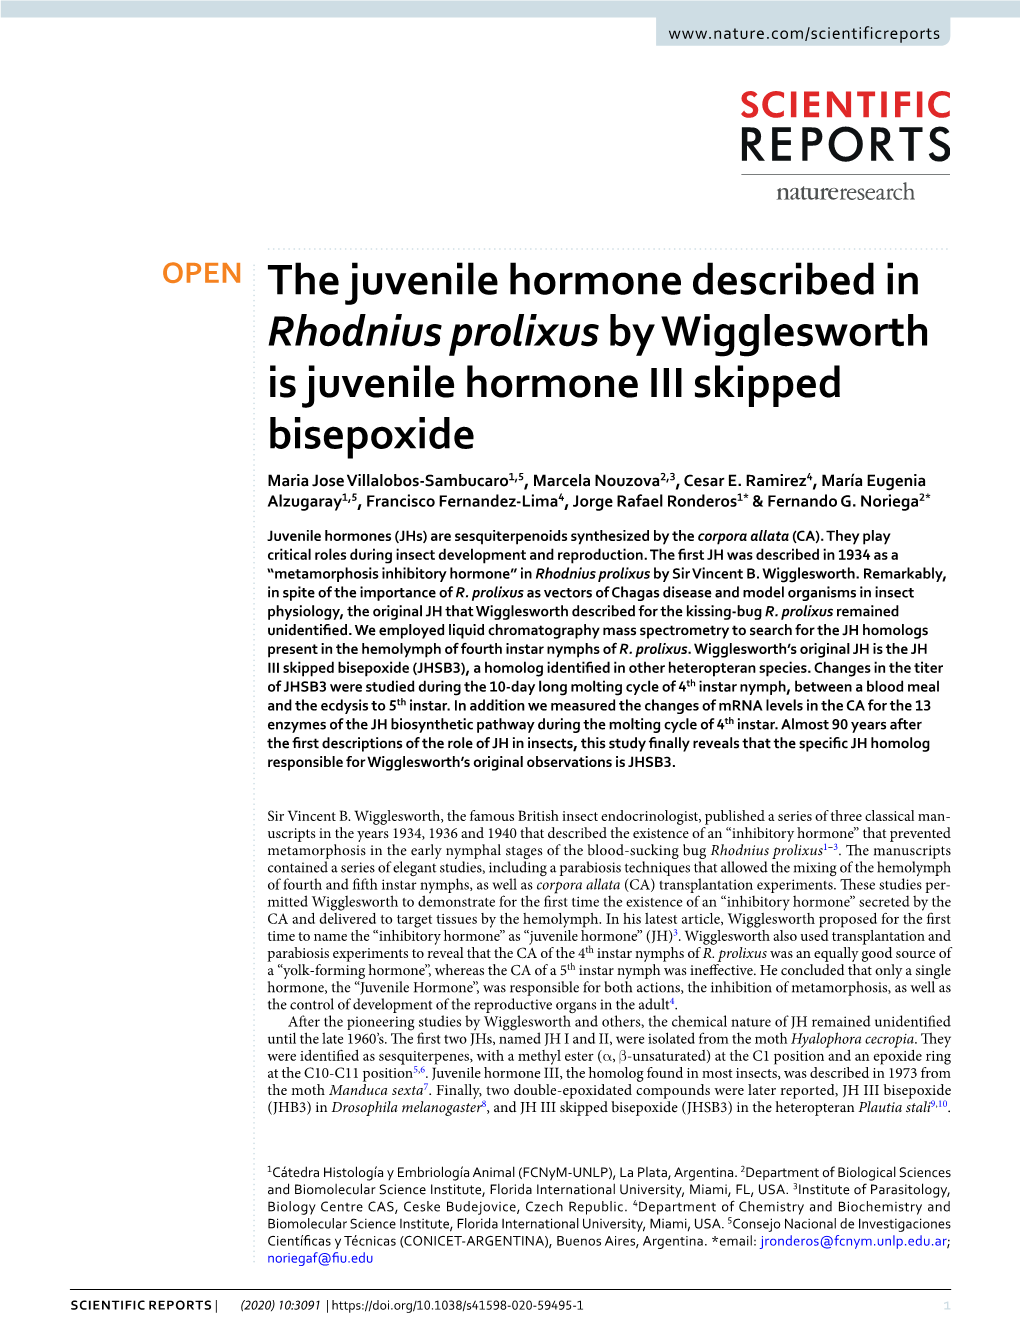 The Juvenile Hormone Described in Rhodnius Prolixus by Wigglesworth Is Juvenile Hormone III Skipped Bisepoxide